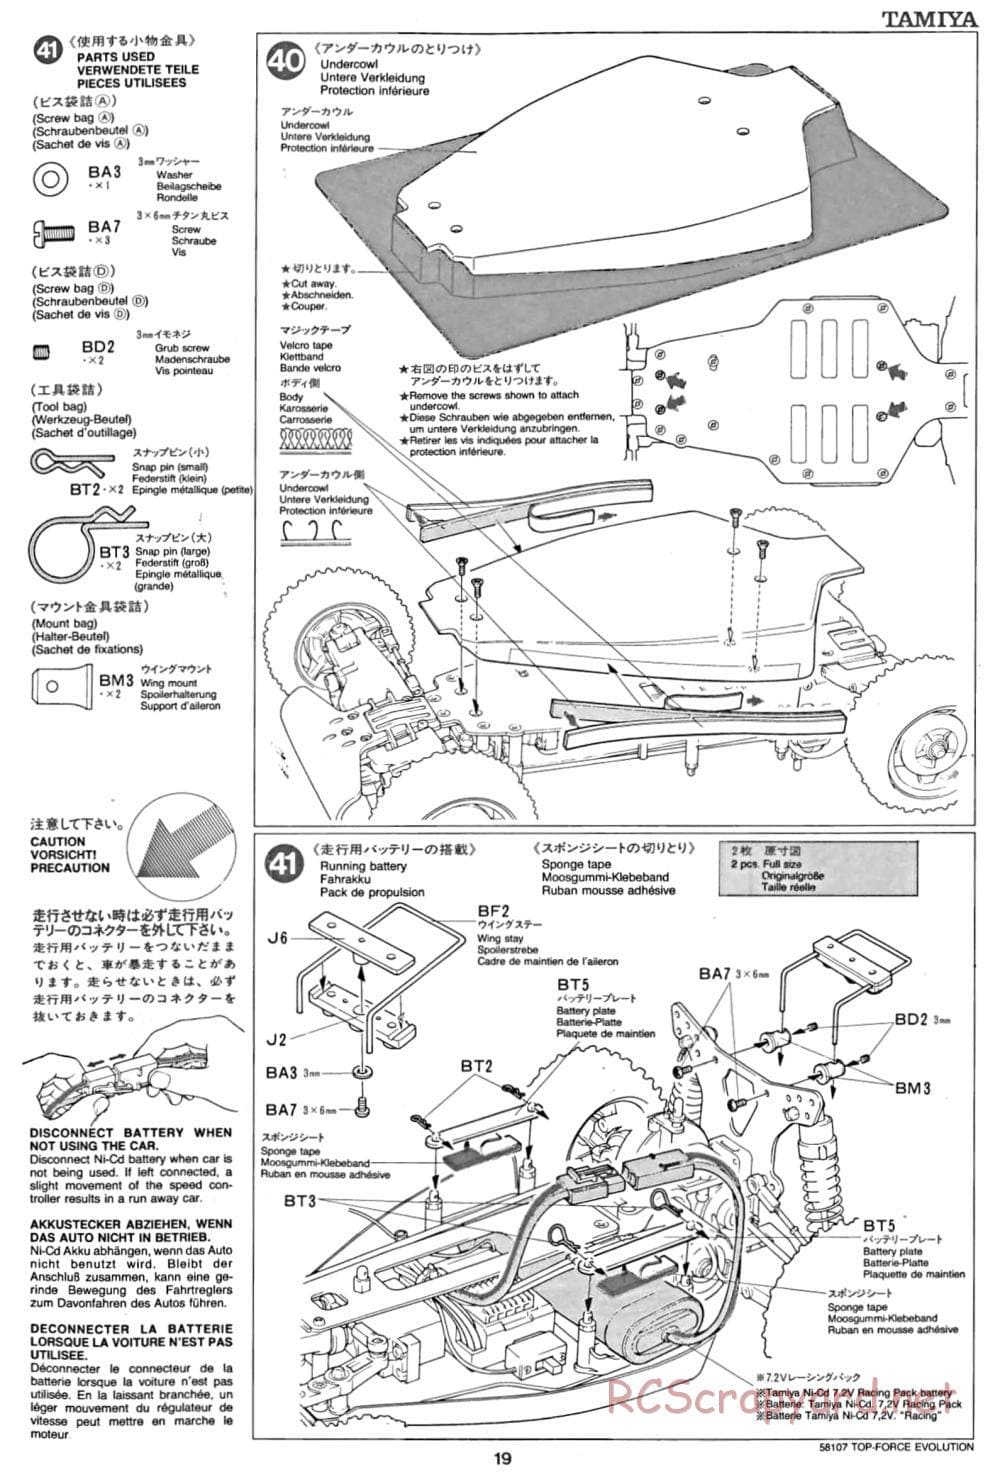 Tamiya - Top Force Evolution Chassis - Manual - Page 19